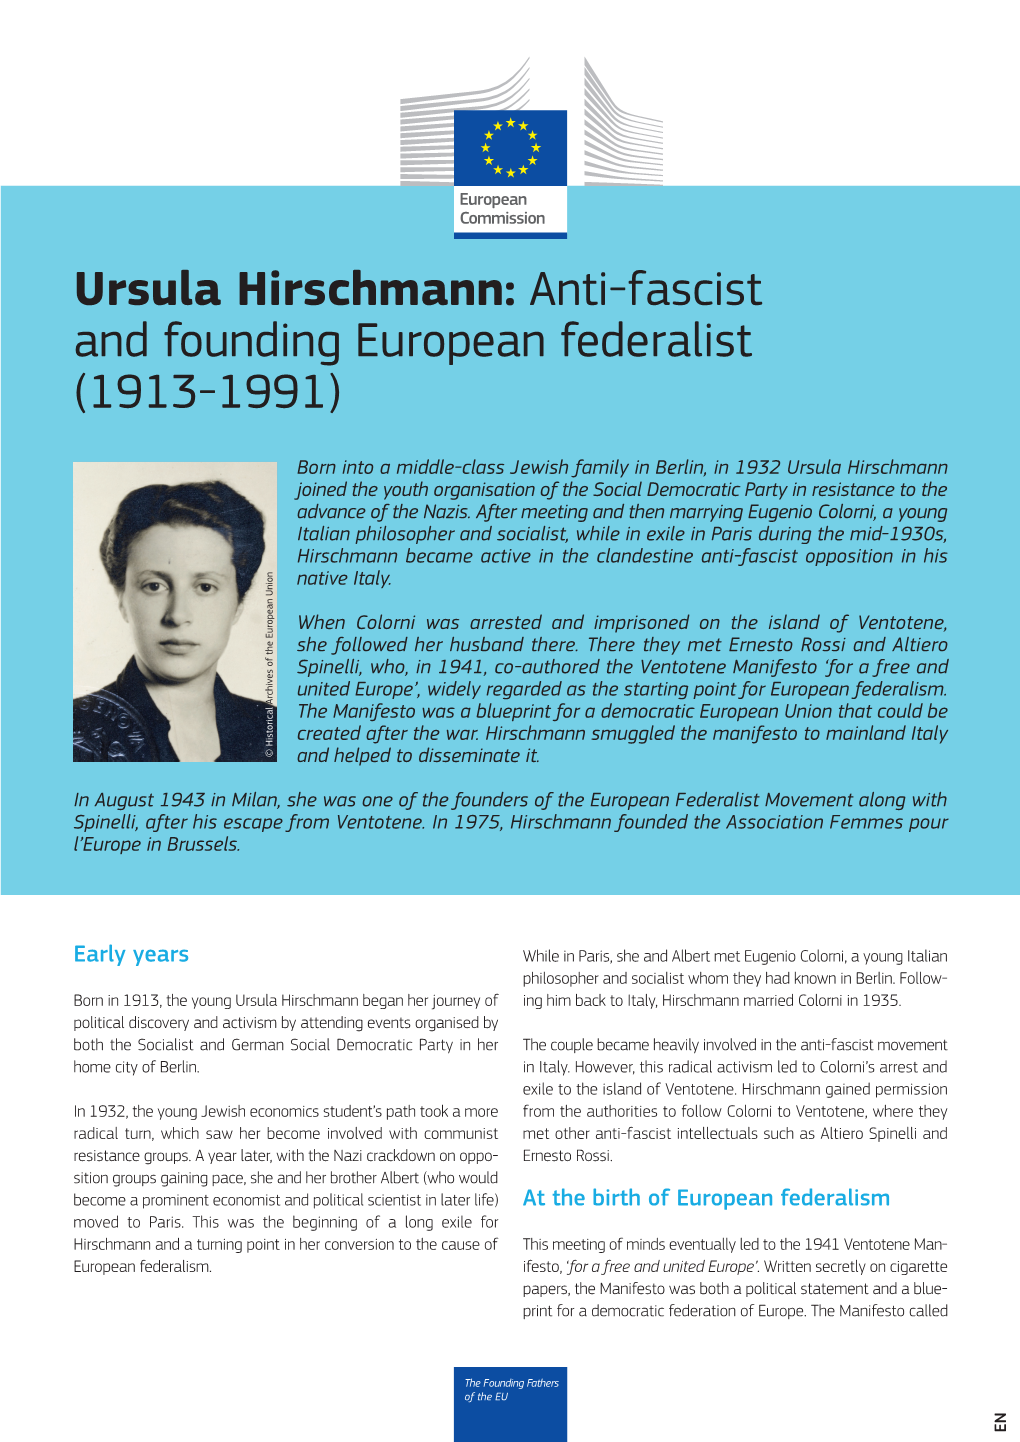 Ursula Hirschmann: Anti-Fascist and Founding European Federalist (1913-1991)